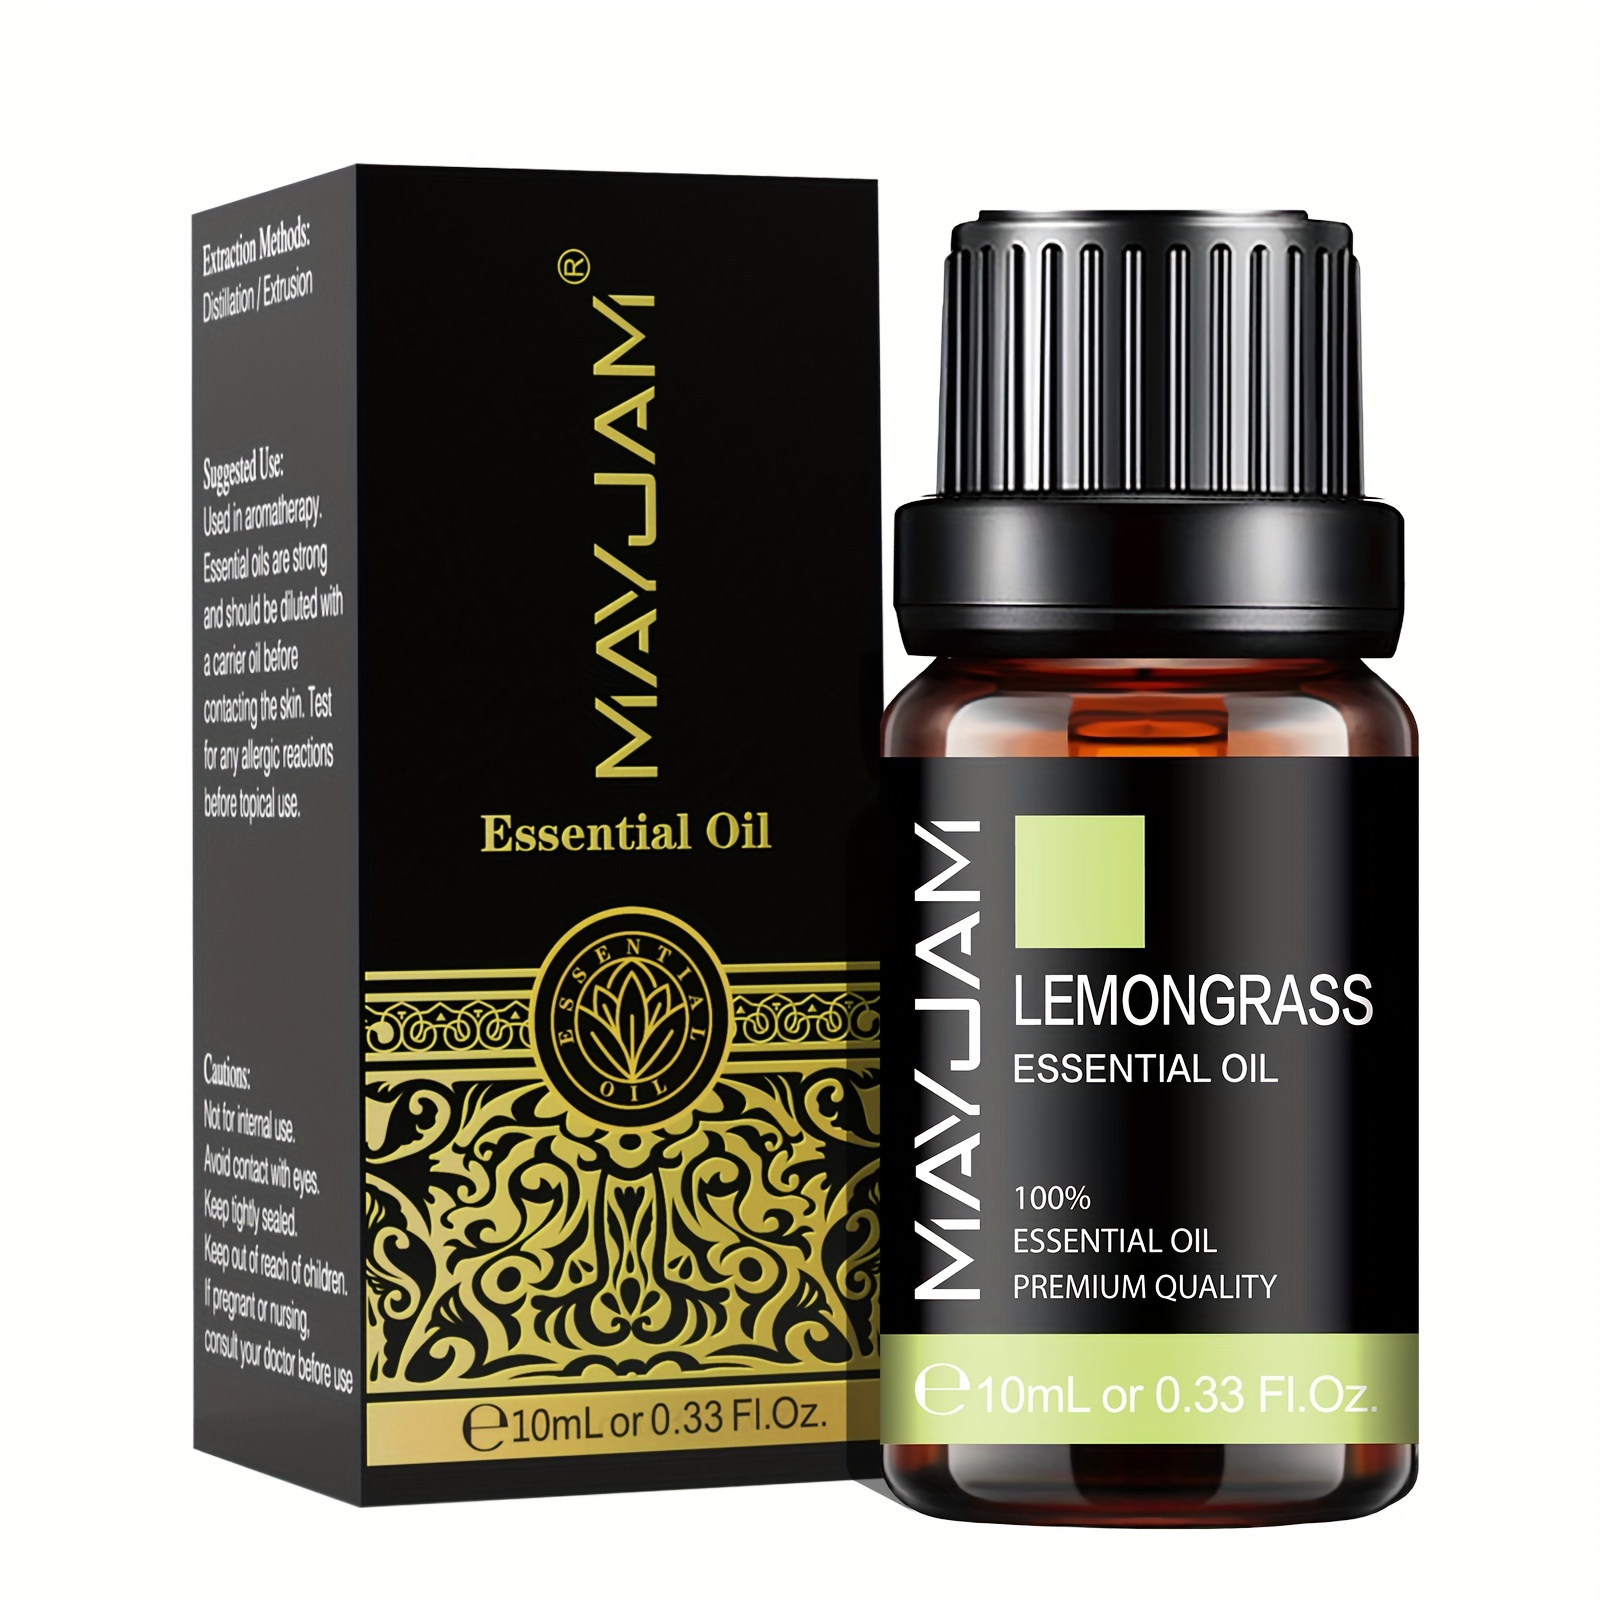 EUQEE Cinnamon Essential Oil 118ml Therapeutic Grade Essential Oil